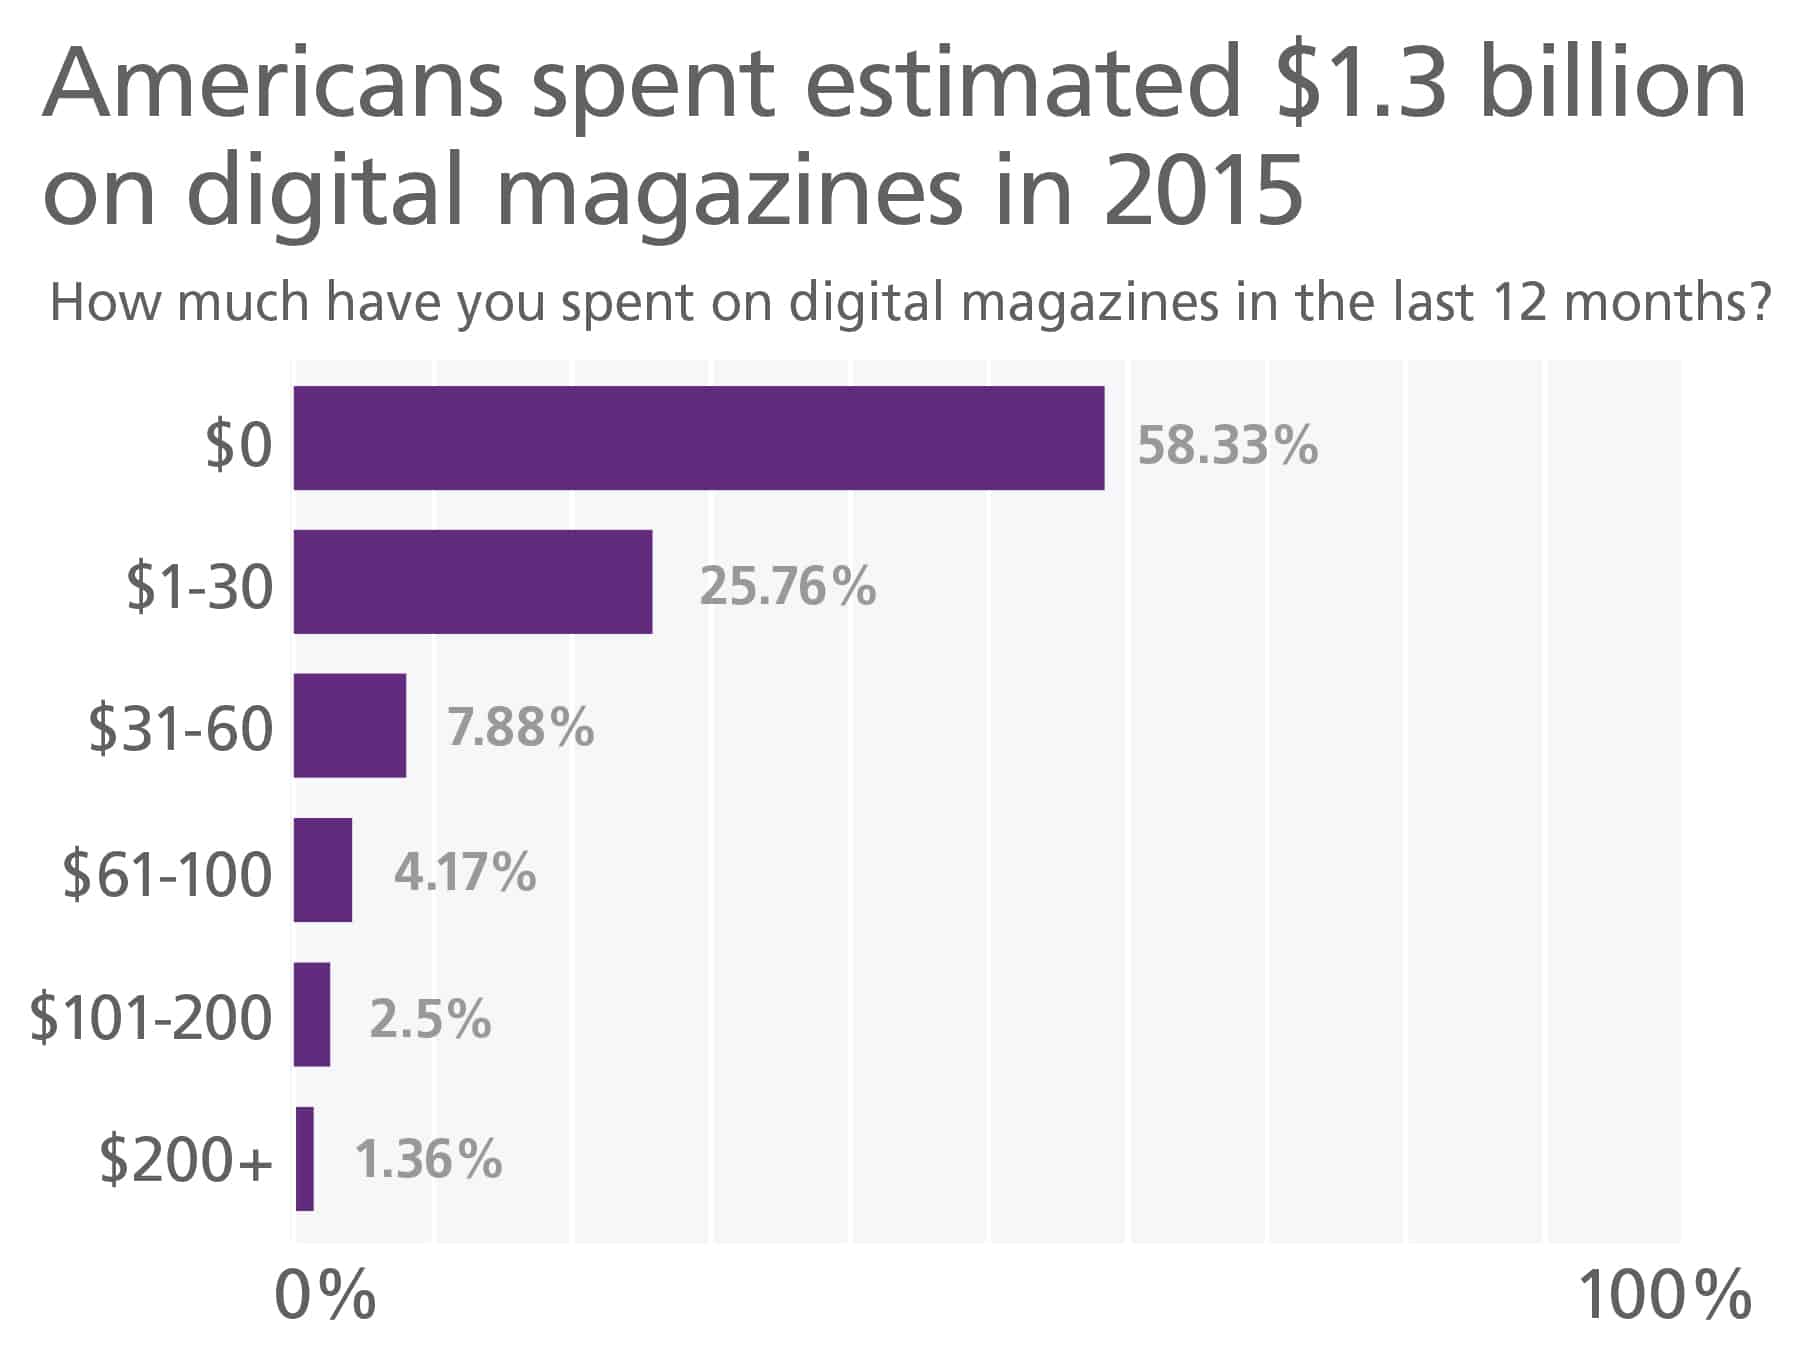 Bar graph of dollars spent on digital magazines